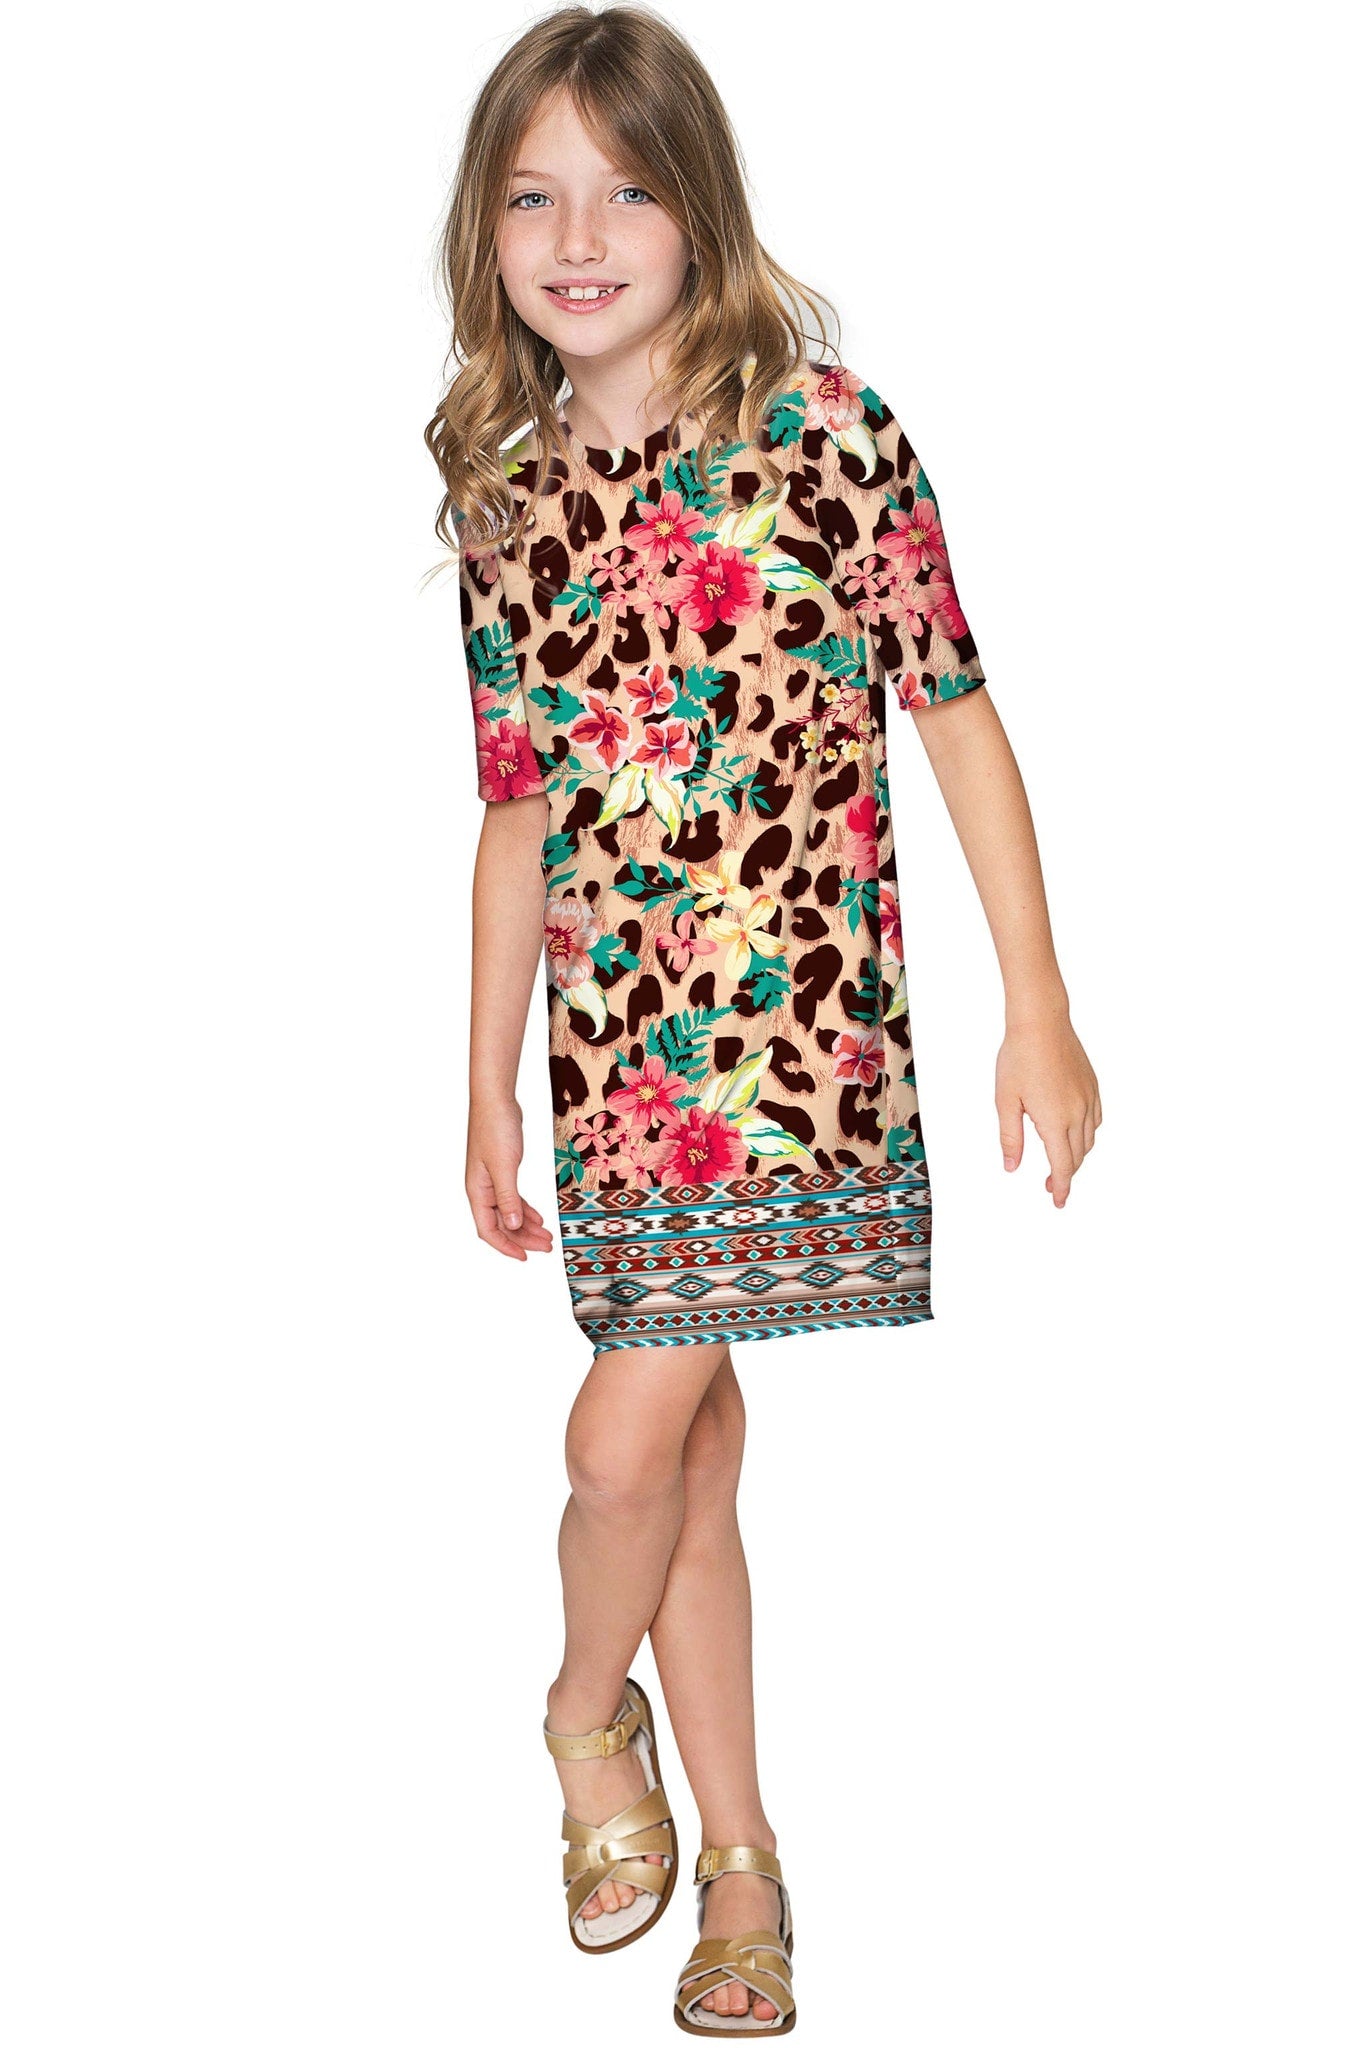 Wild & Free Grace Leopard Print Fall Chic Shift Dress - Girls - Pineapple Clothing